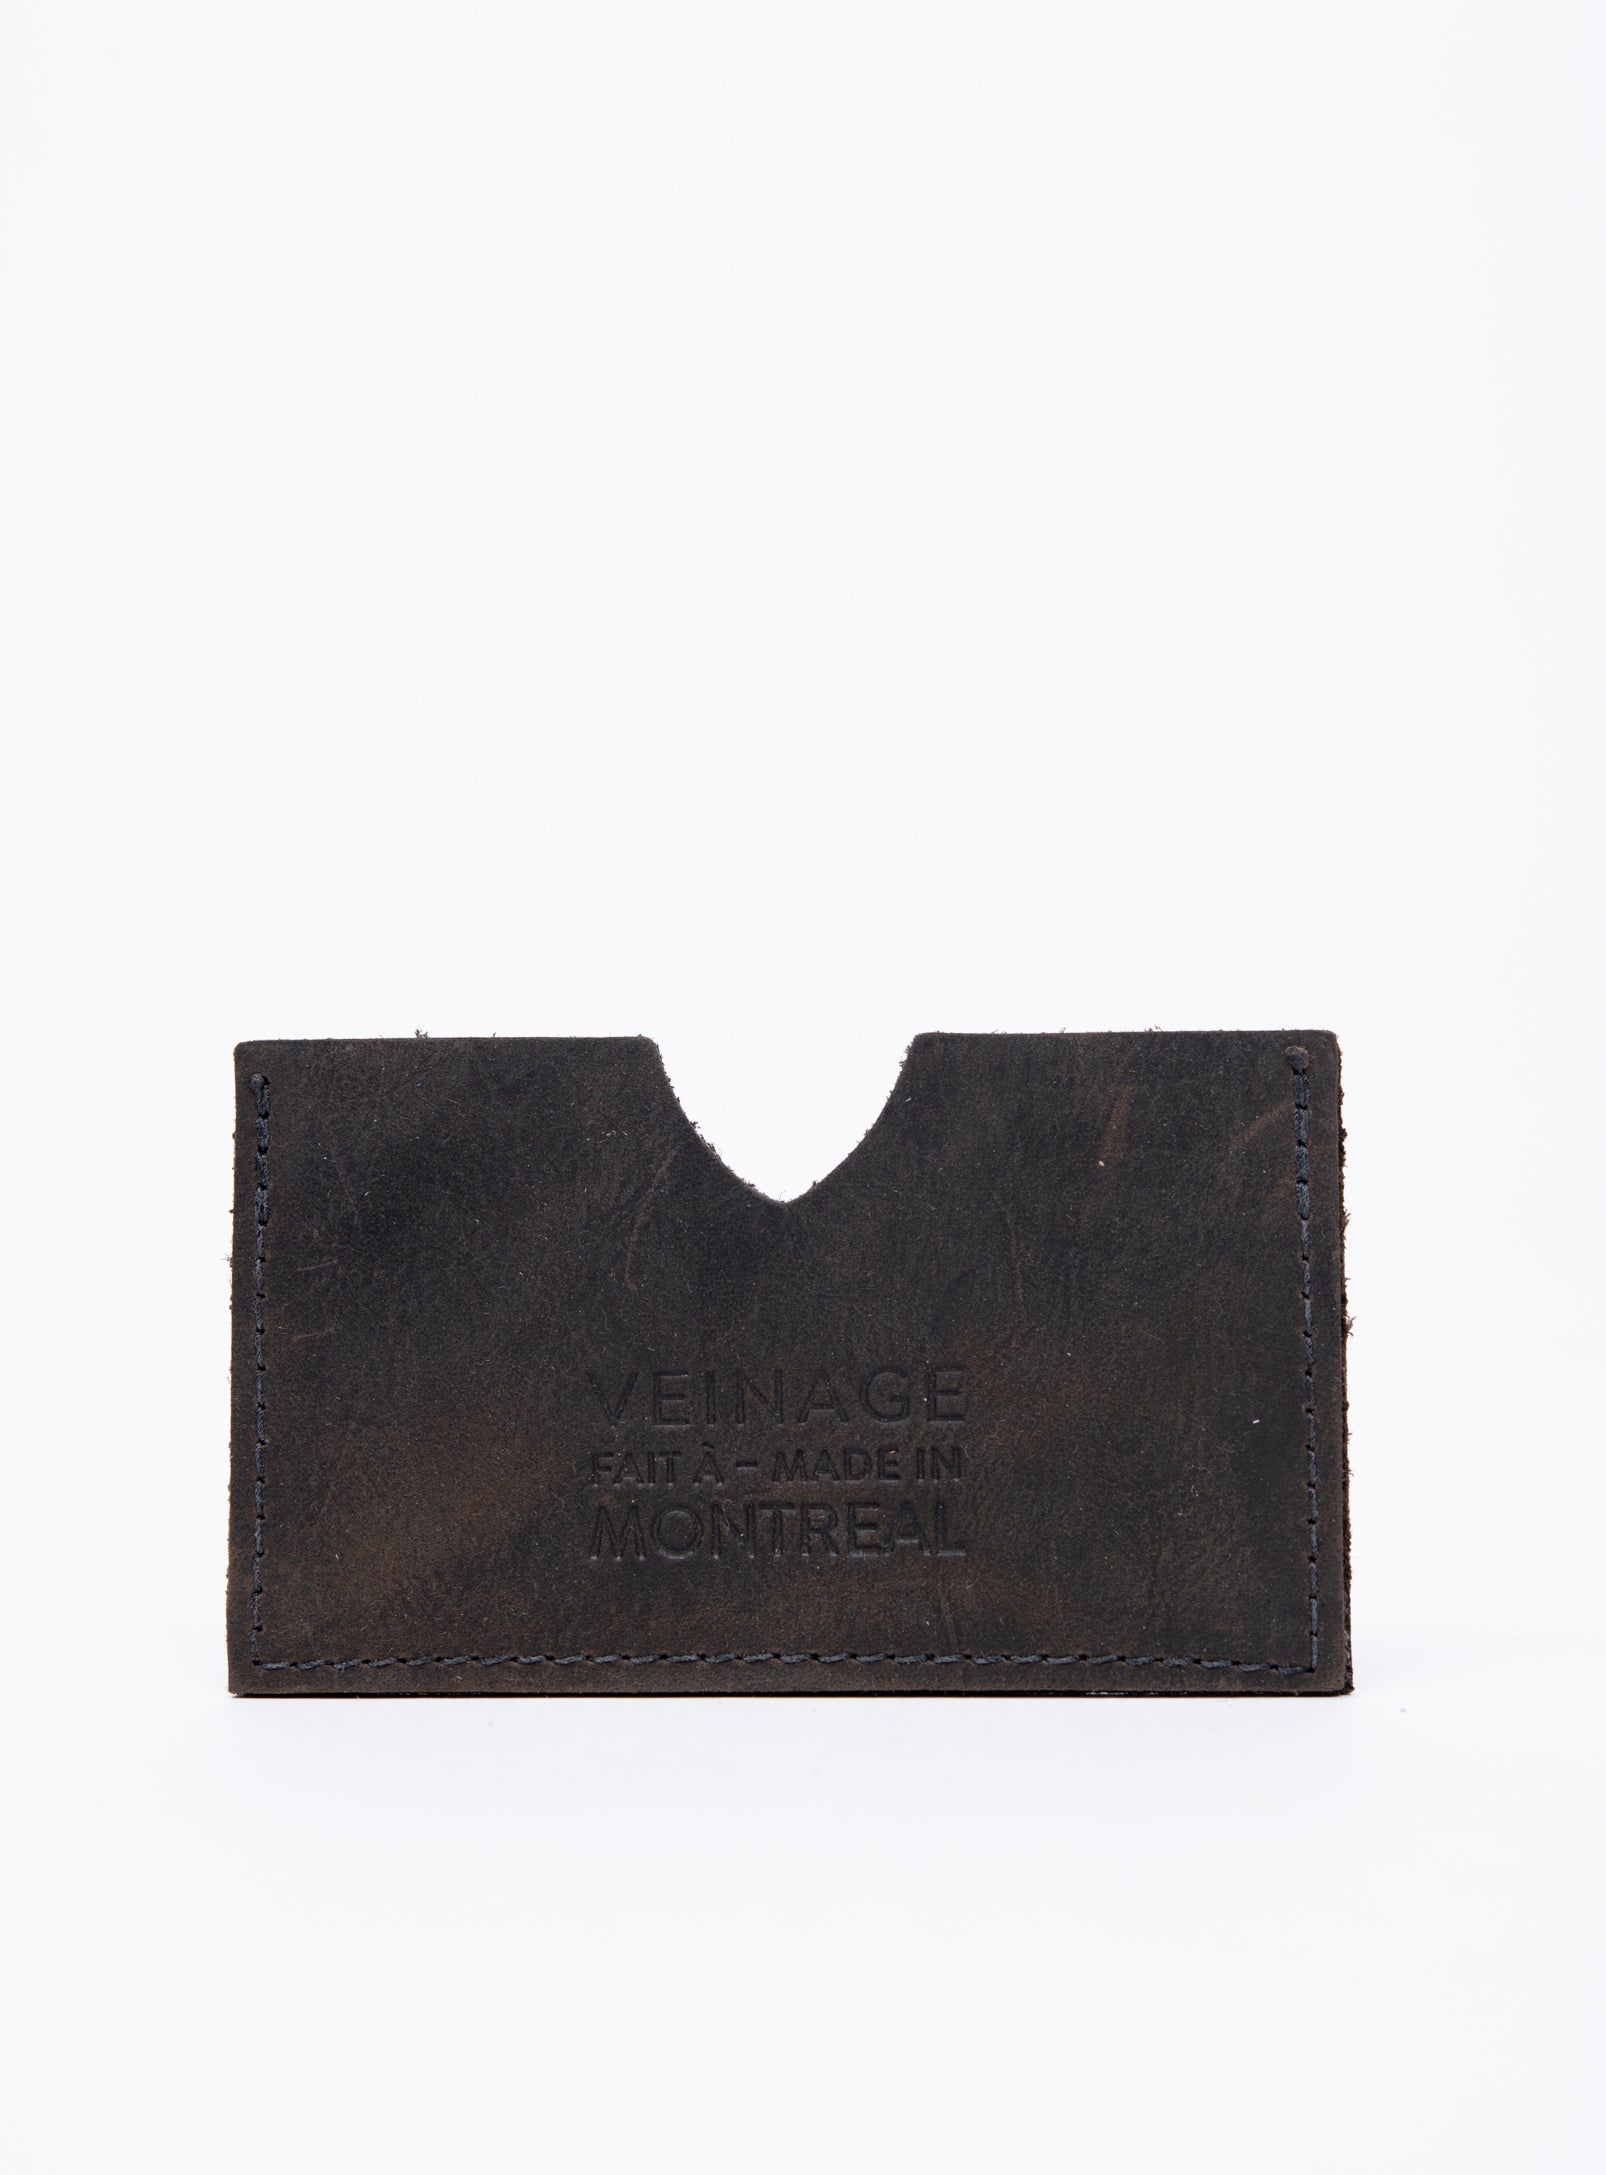 Leather minimalist cardholders CHABOT model